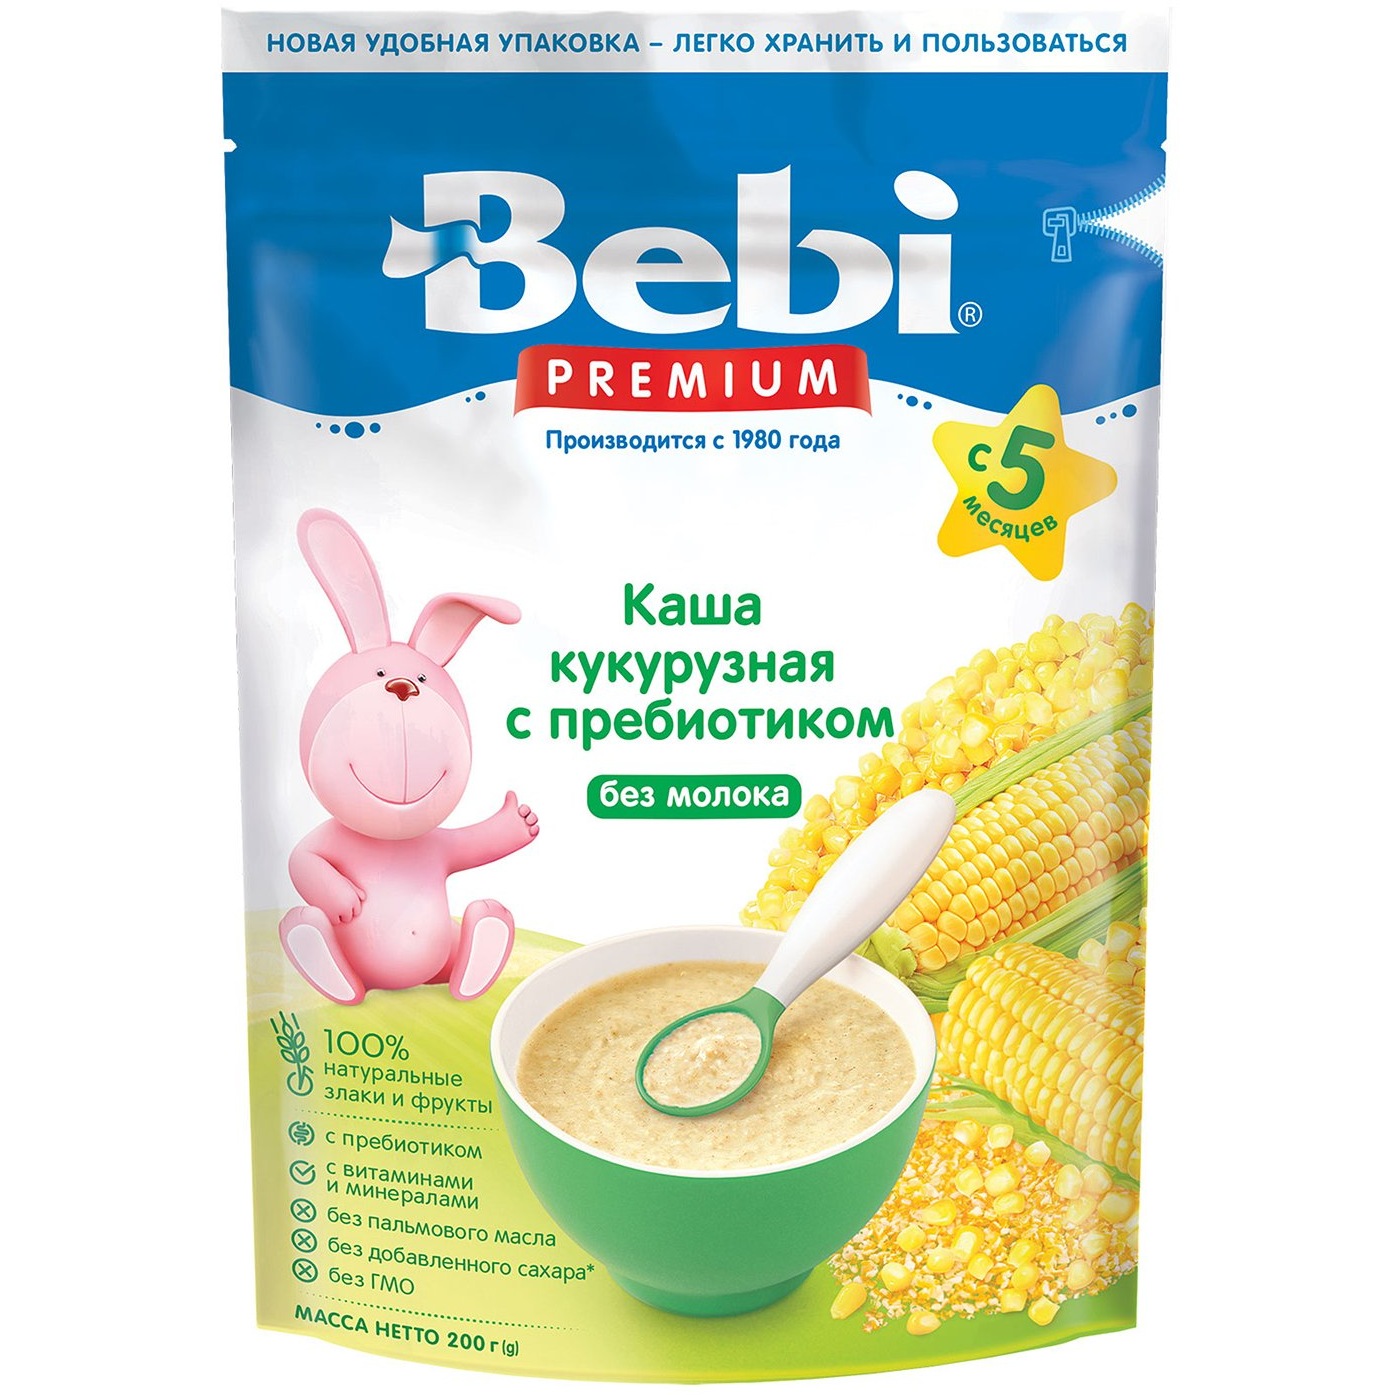 Каша безмолочная "Беби Премиум" кукурузная с пребиотиком (200 г.) УТ-00058450